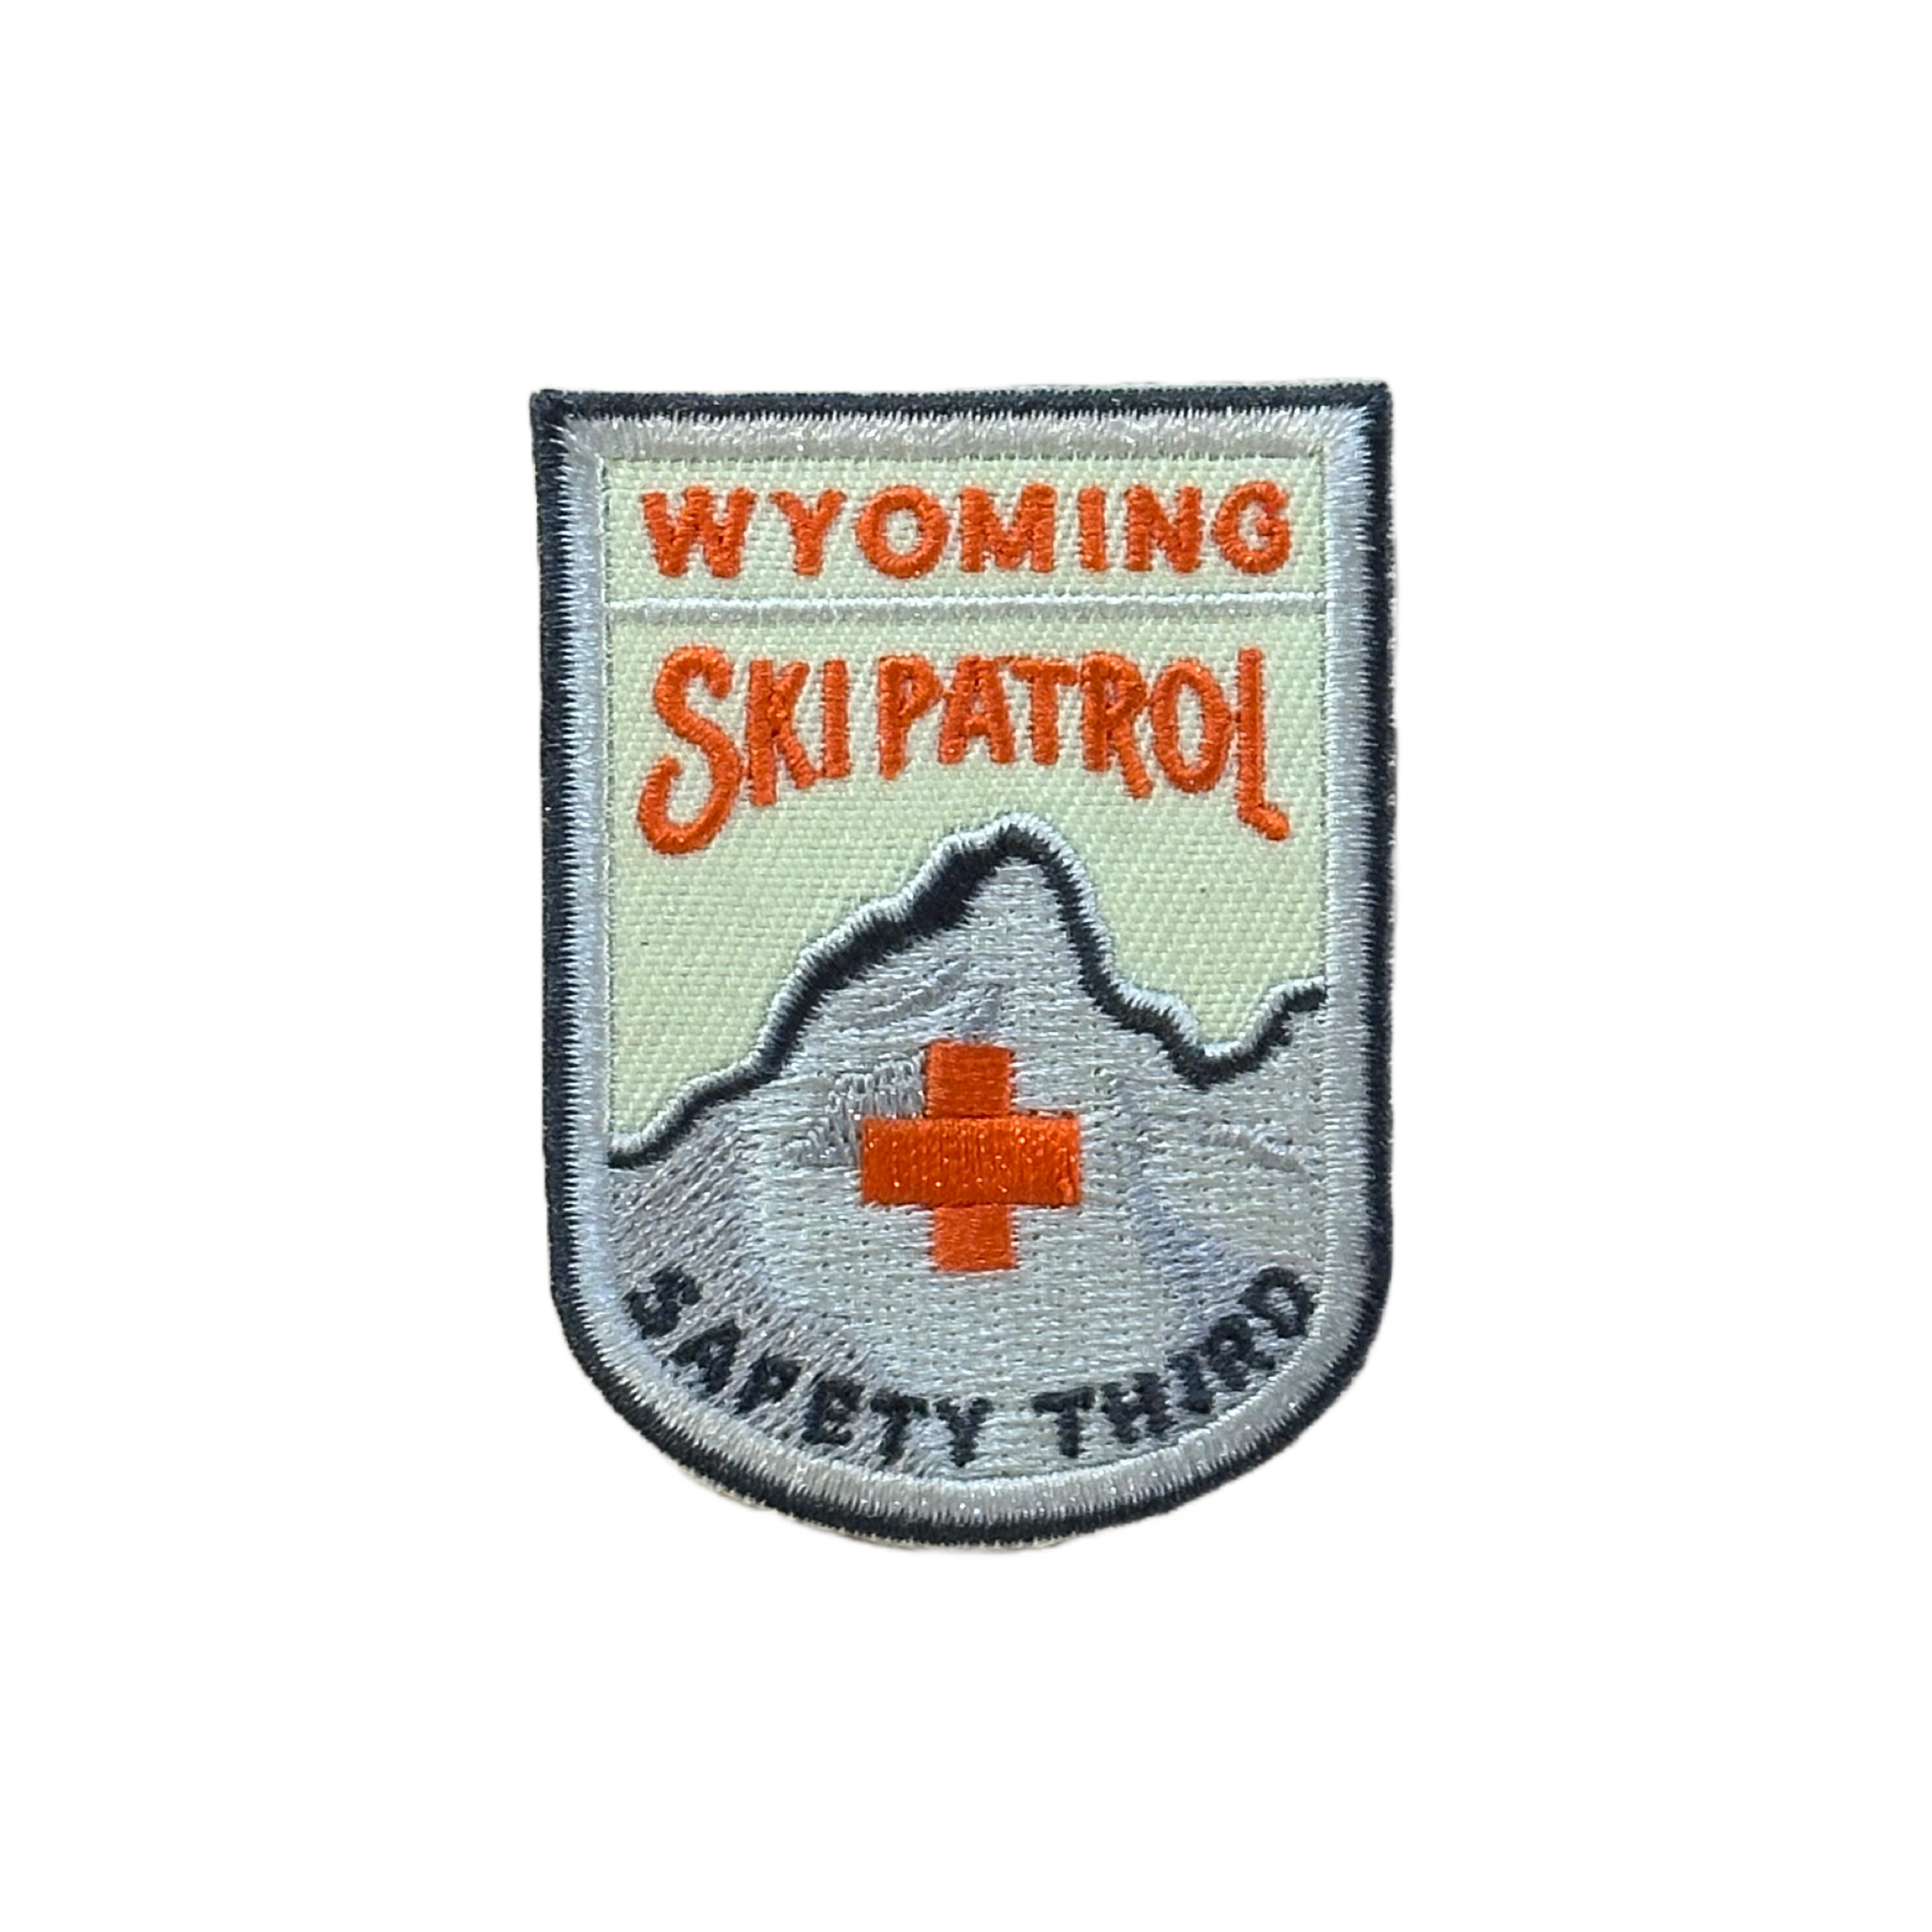 Wyoming Ski Patrol Patch